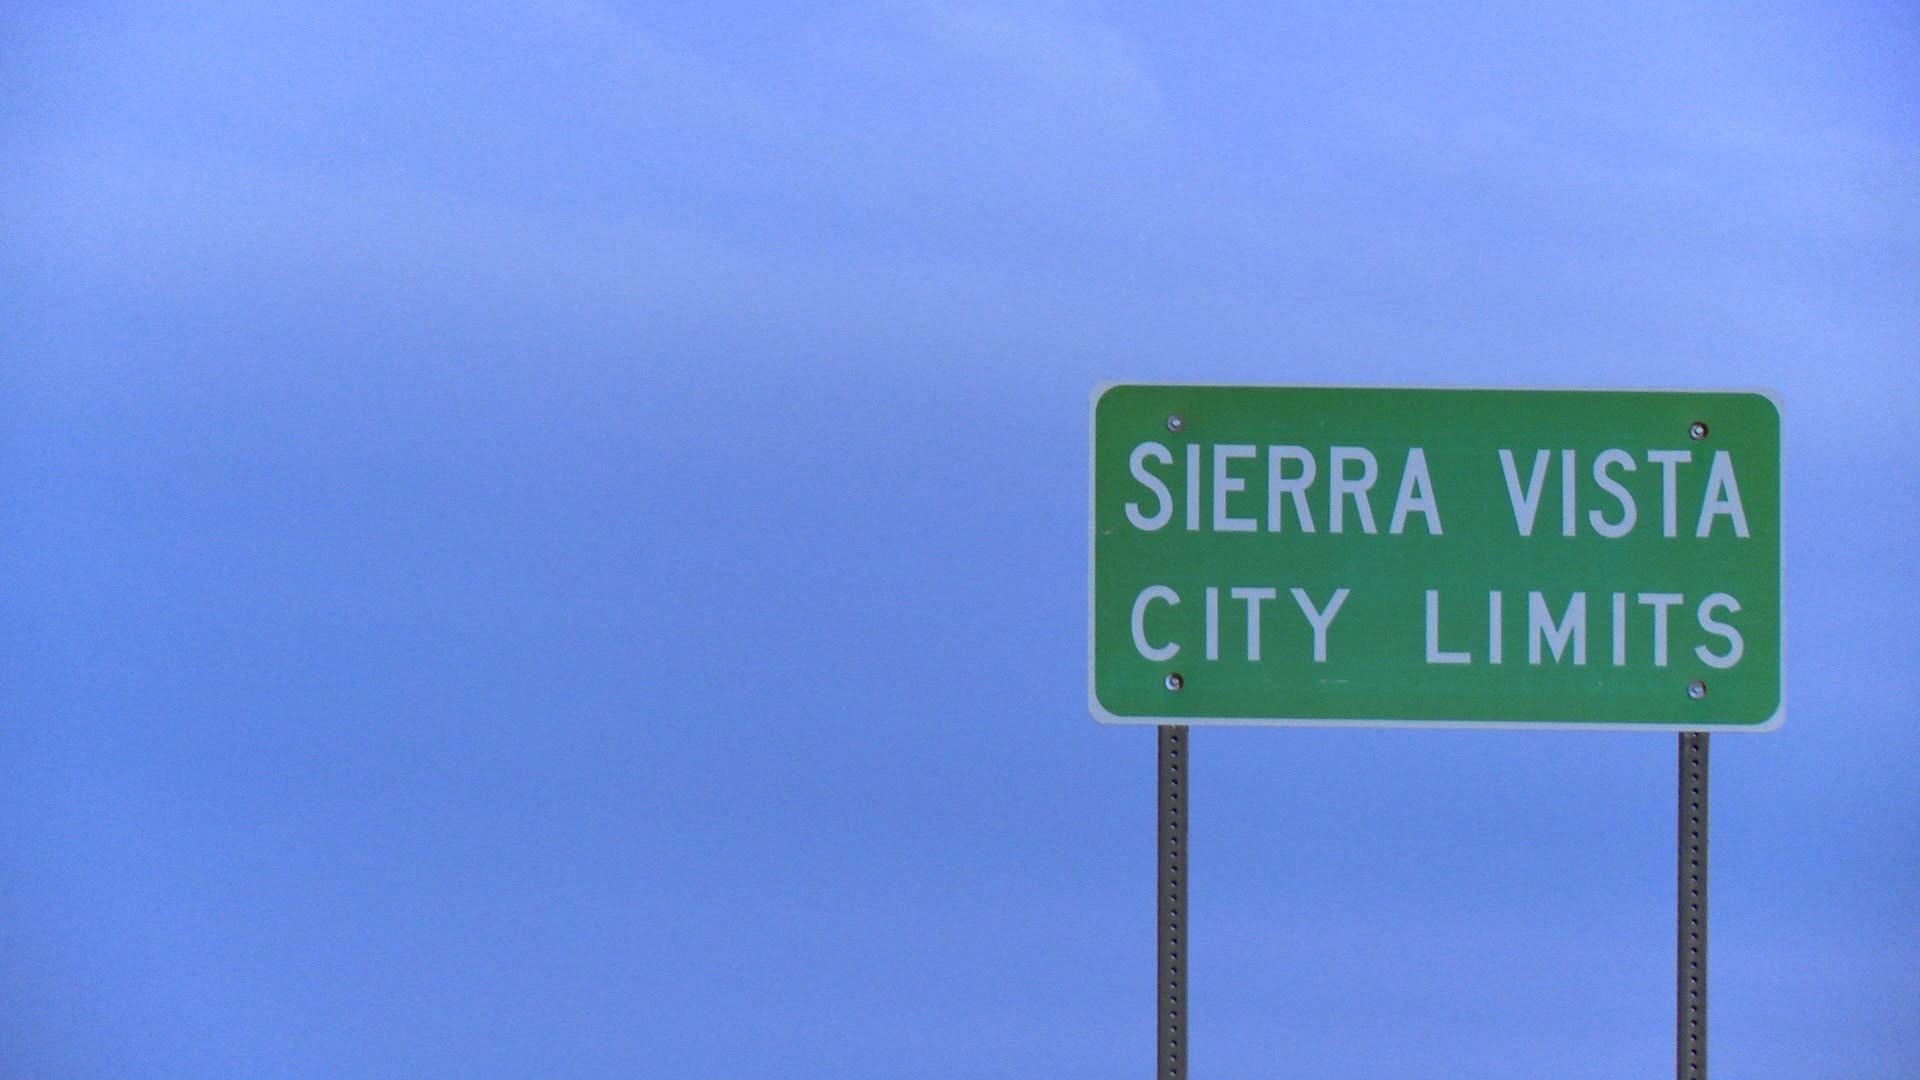 A city limits sign in Sierra Vista.